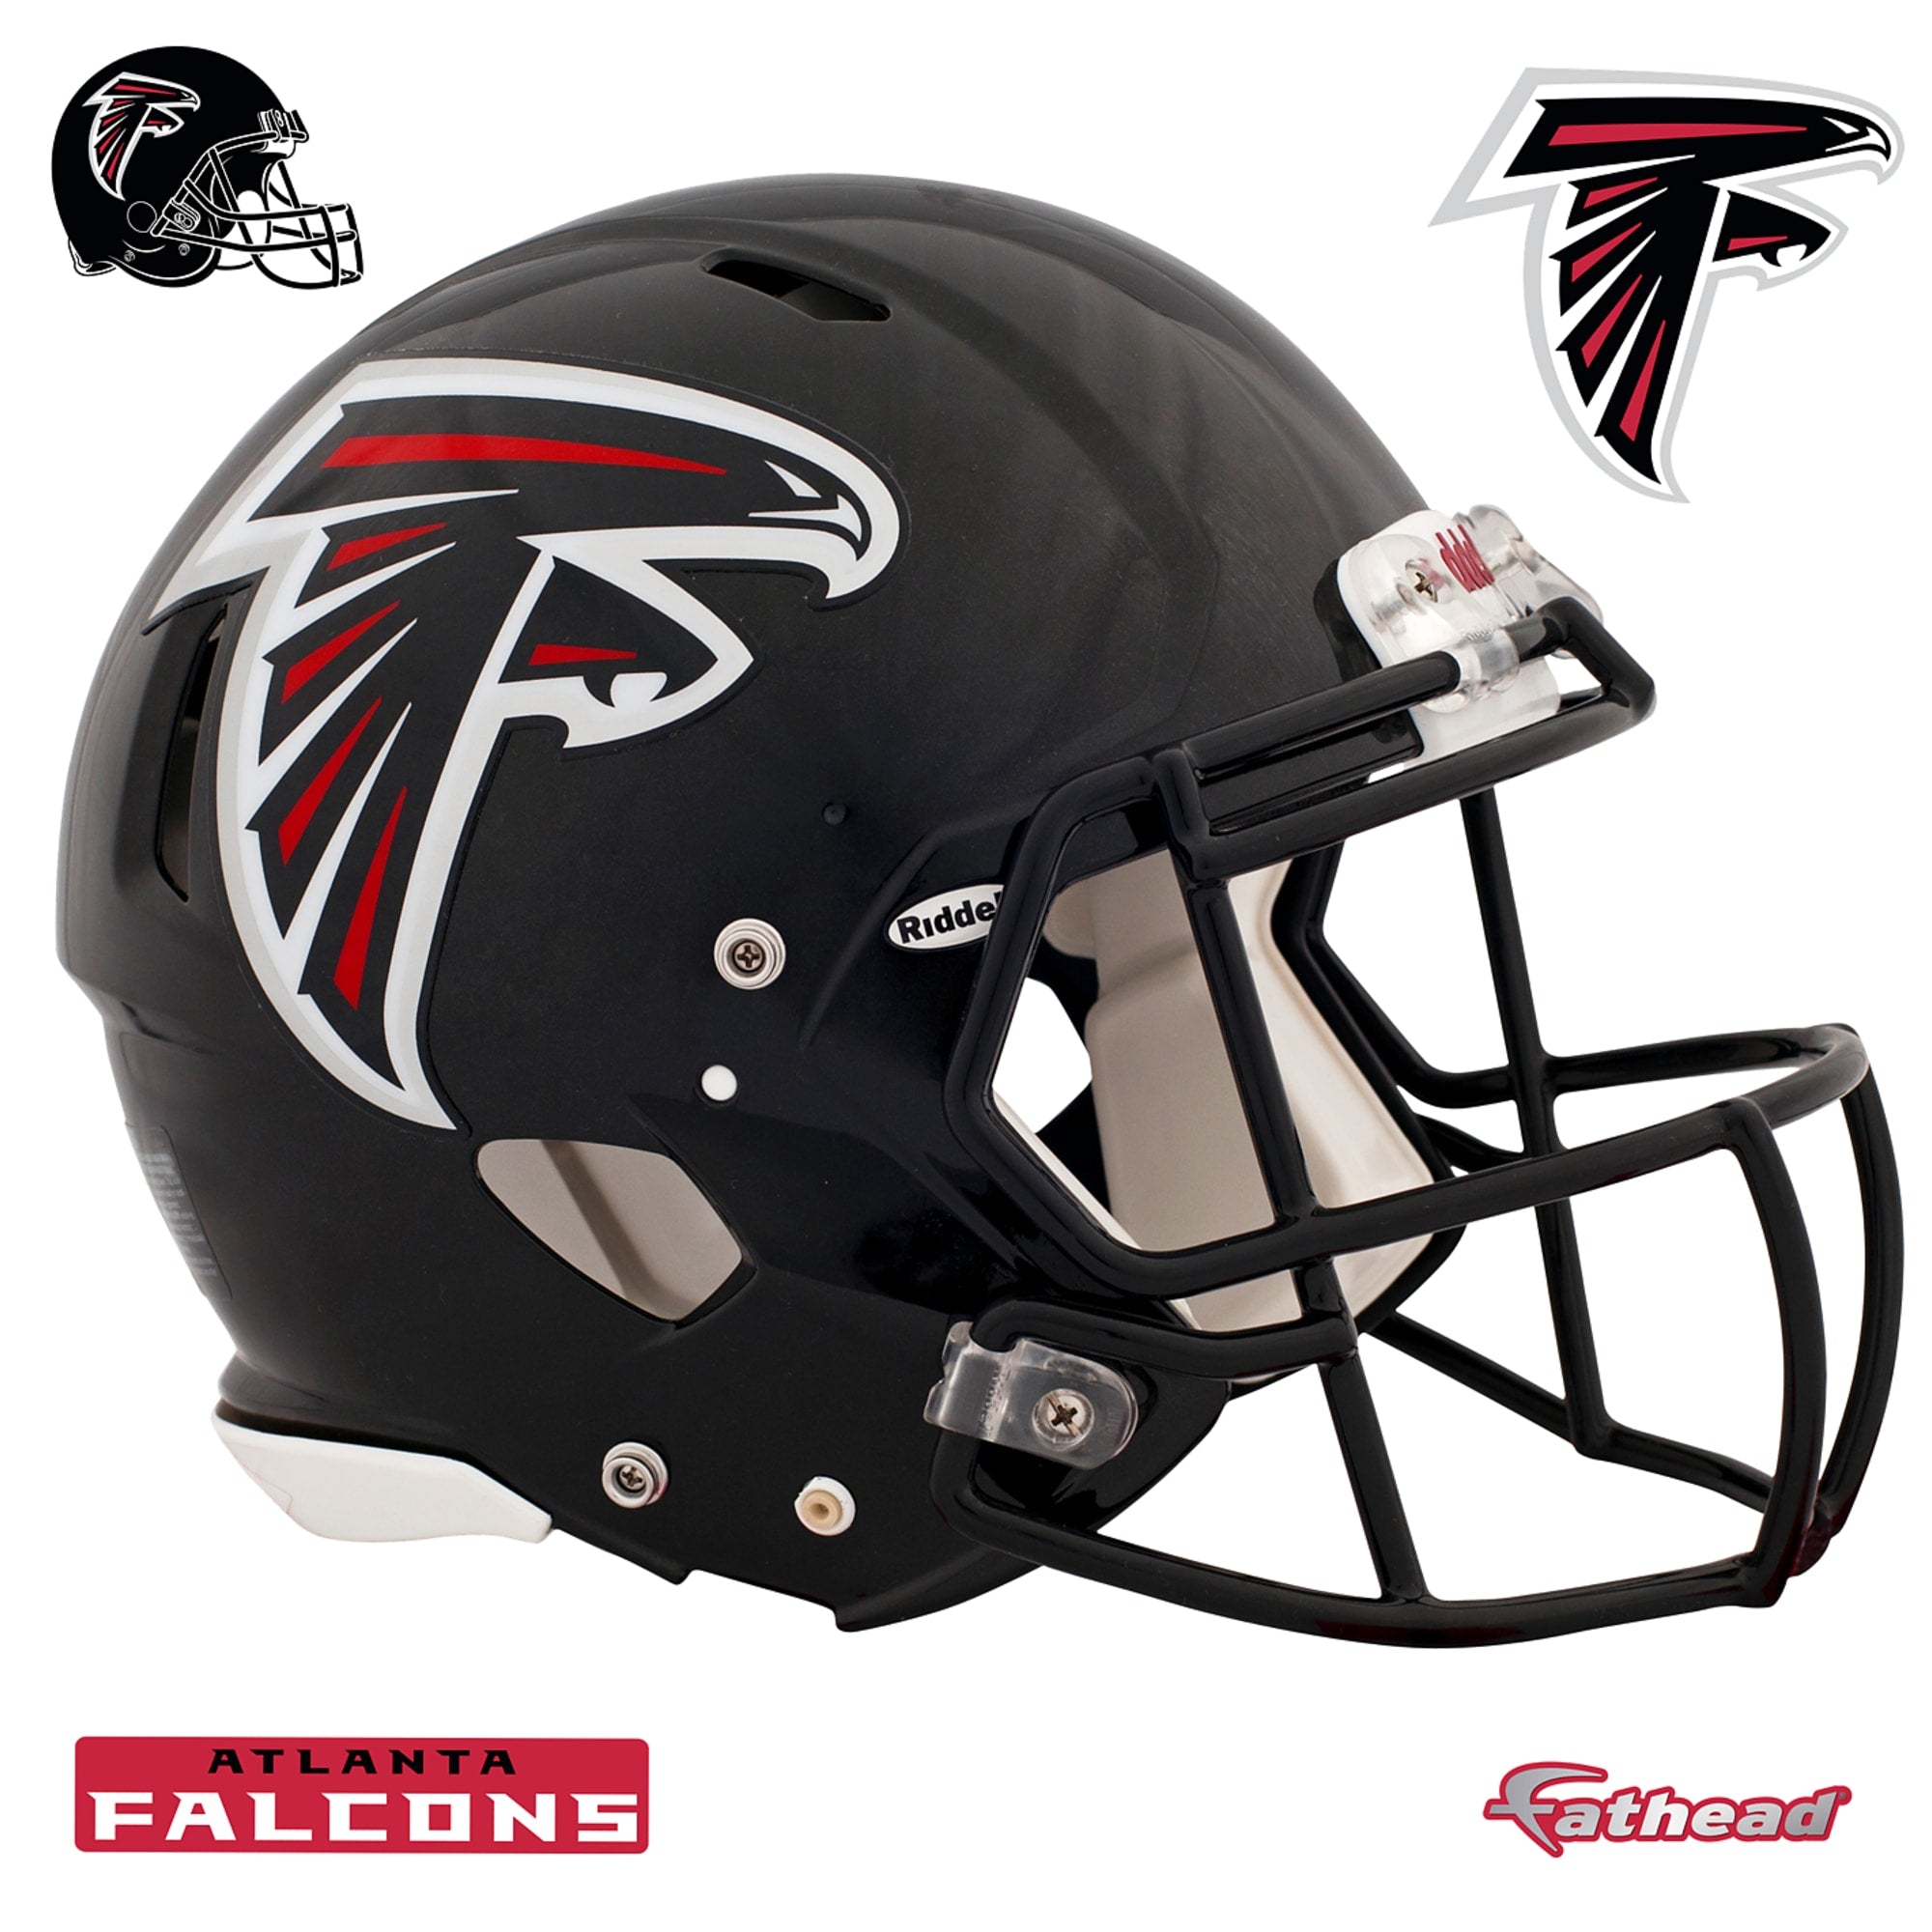 NFL Revolution Helmet Wall Decal, Atlanta Falcons